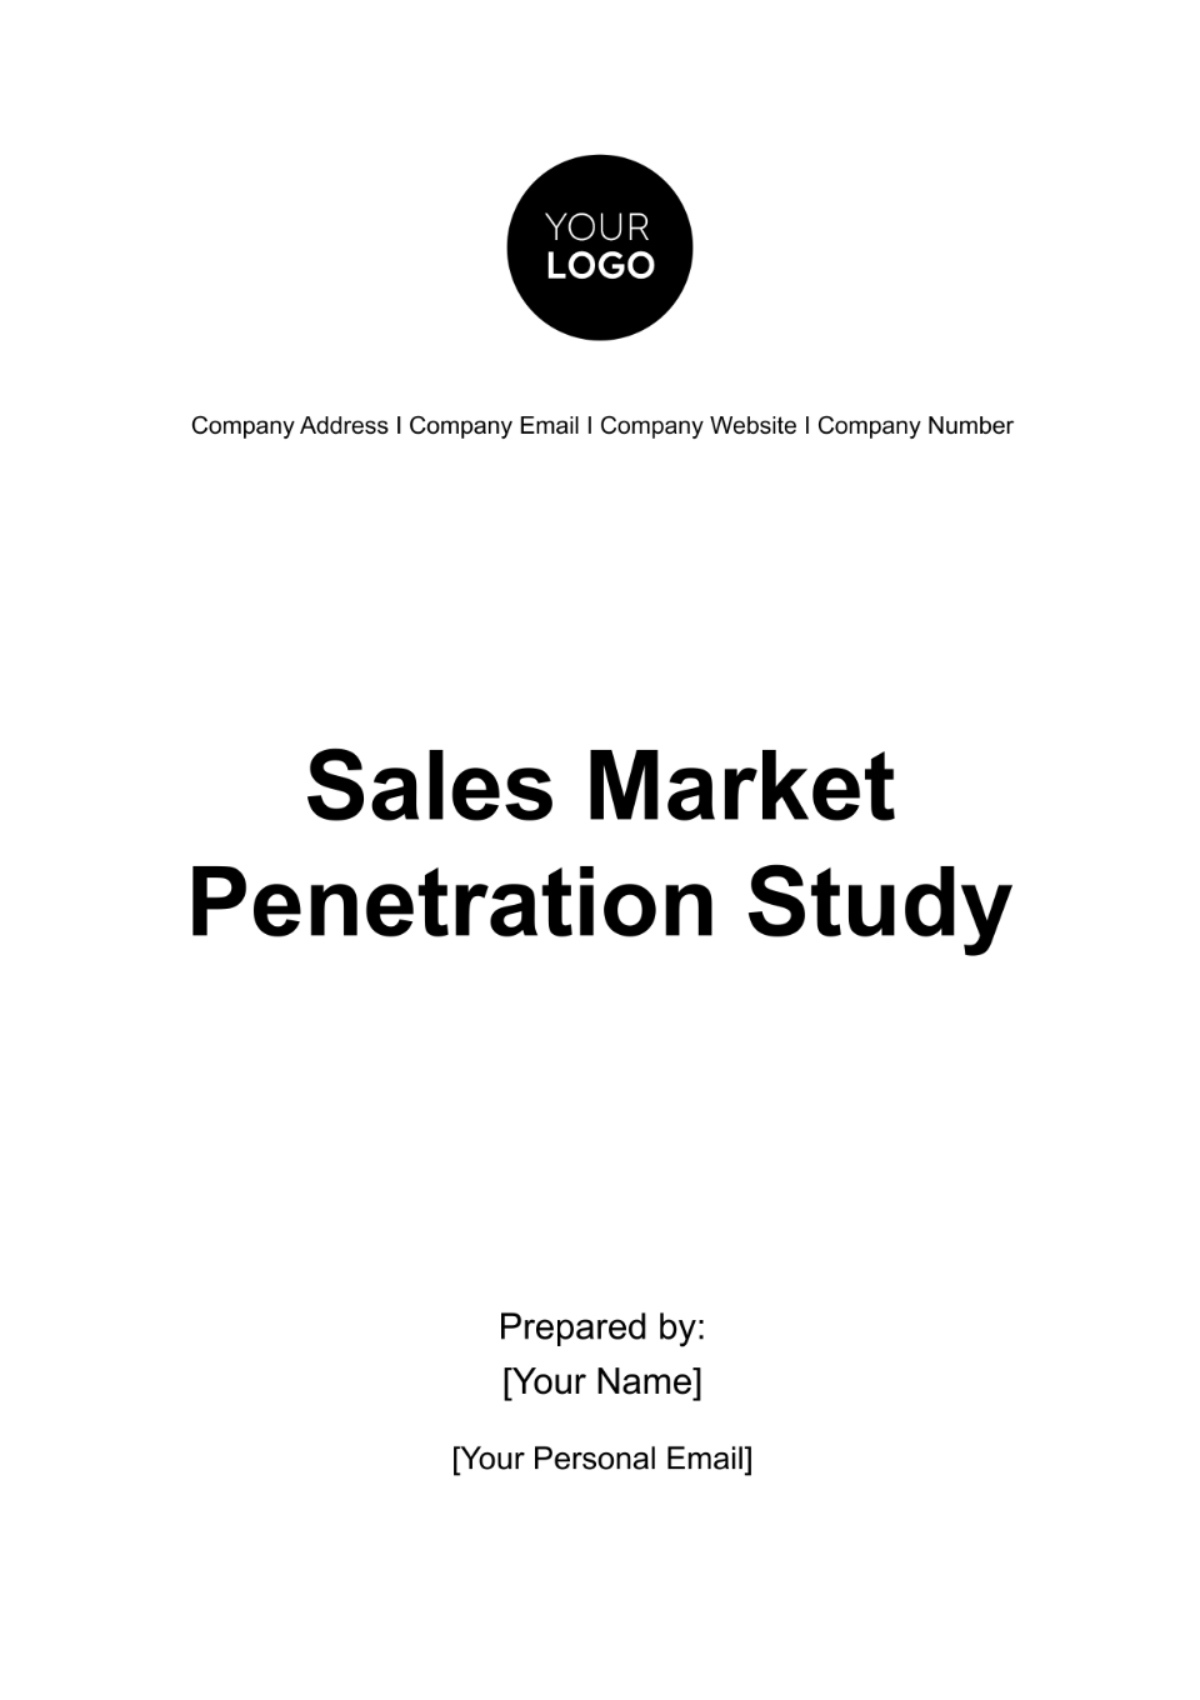 Sales Market Penetration Study Template